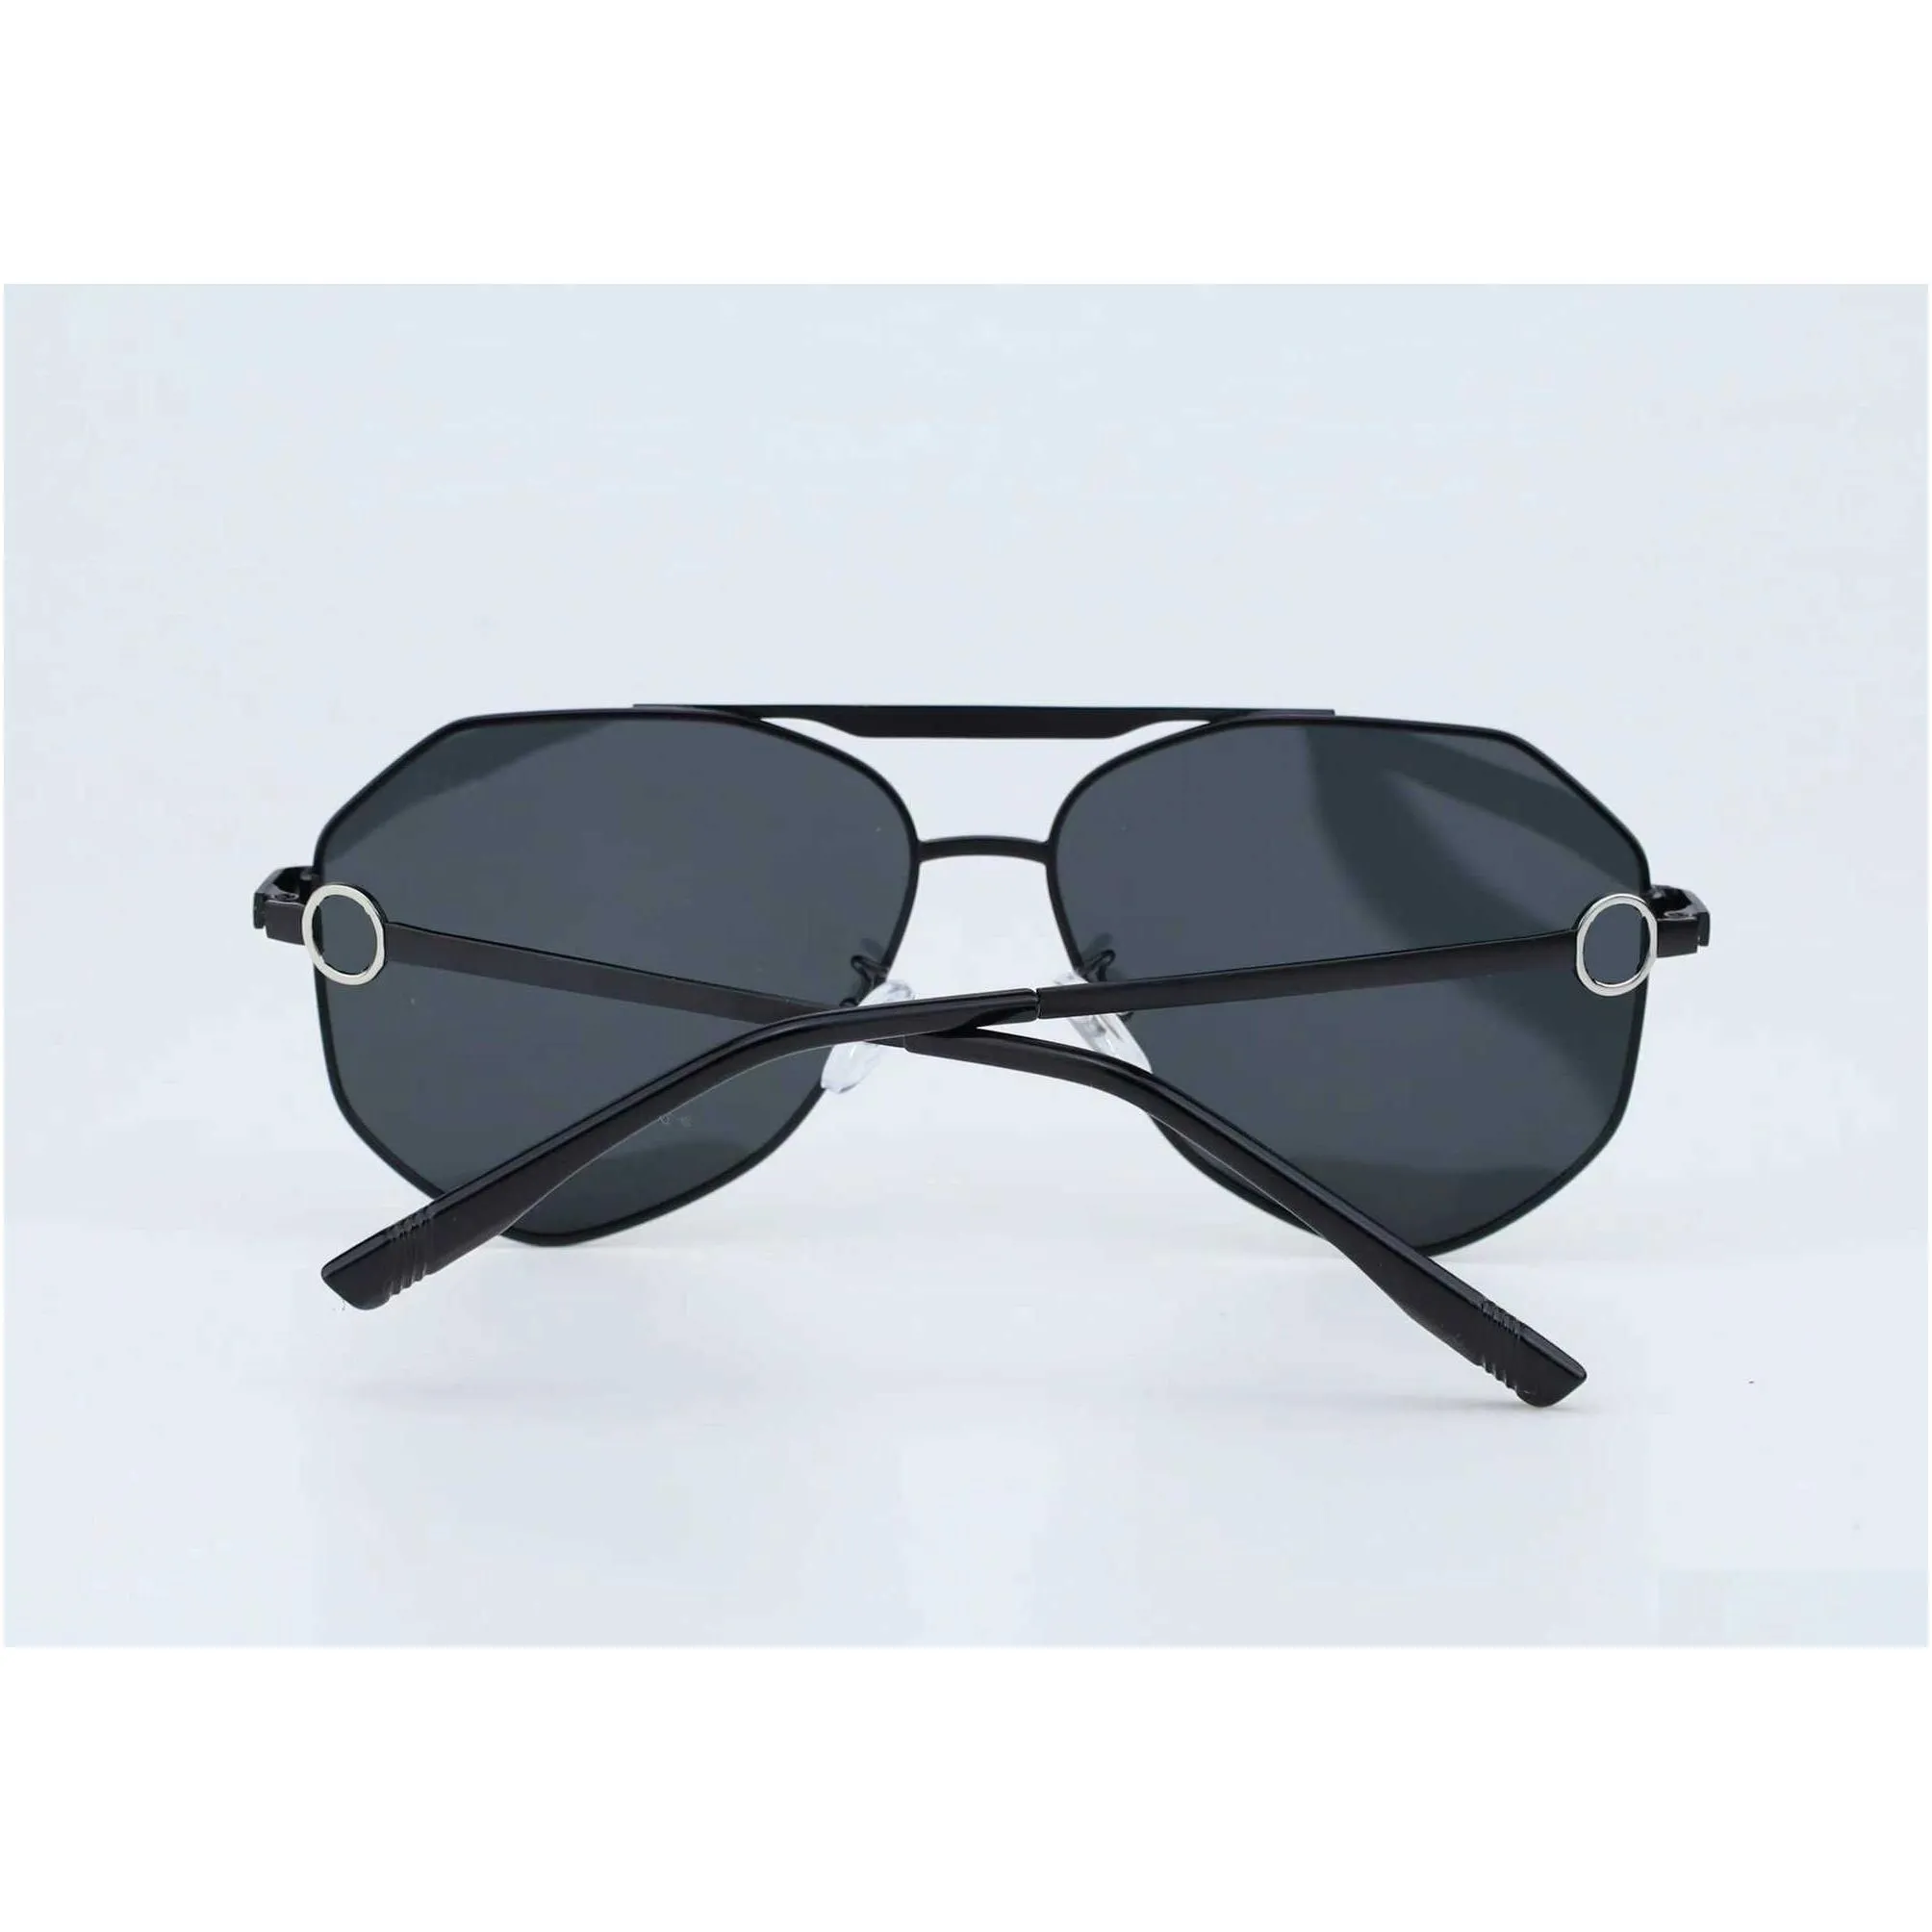 sunglasses 1pcs fashion eyewear sun glasses designer mens womens brown cases black metal frame dark lenses